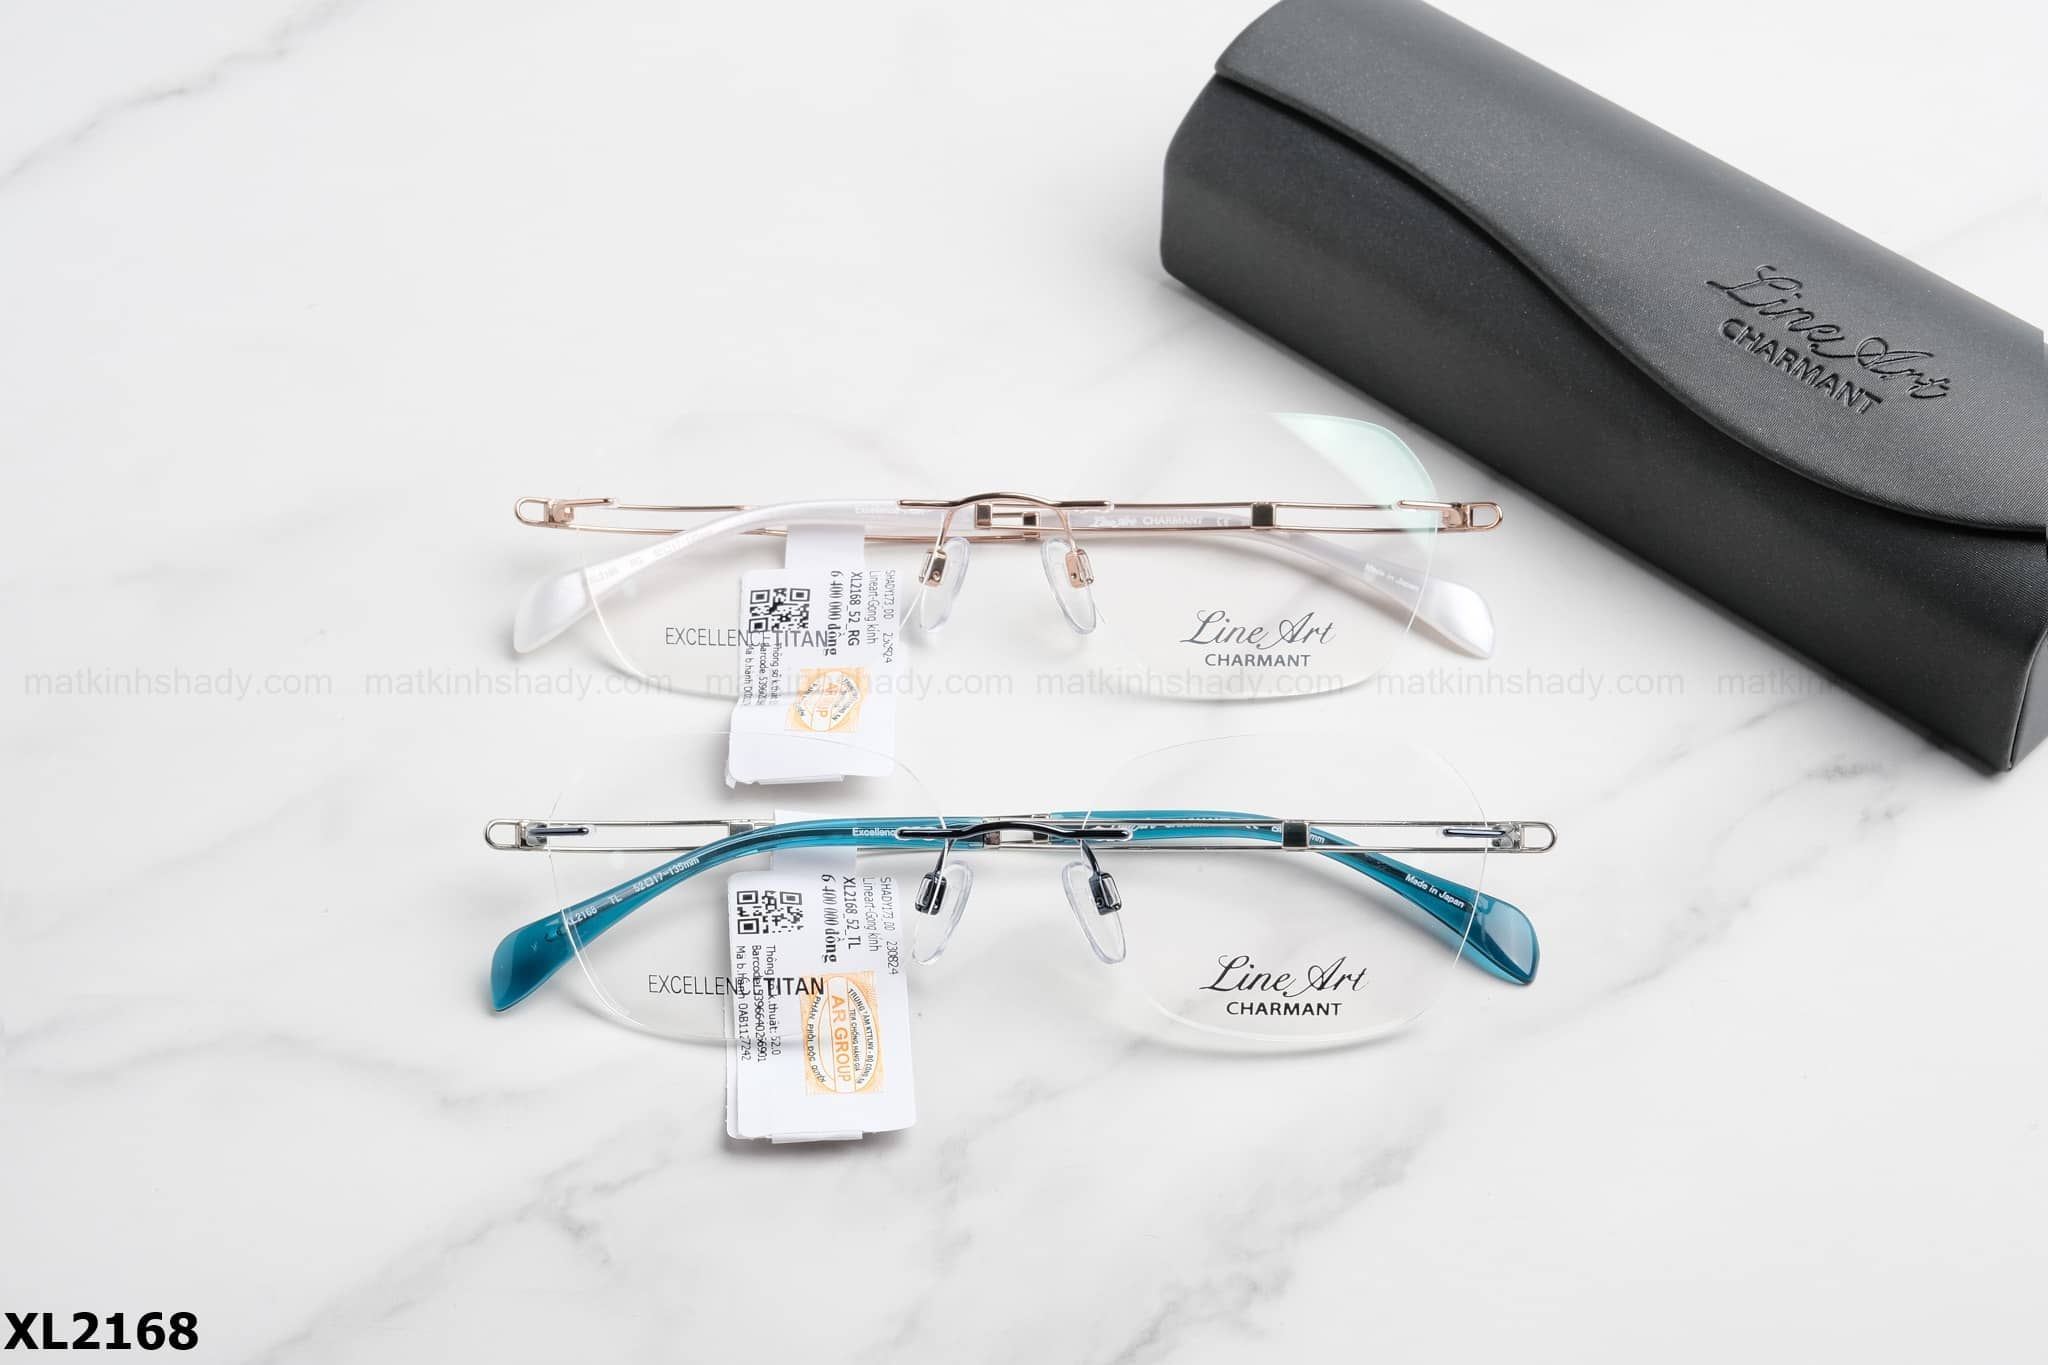  LINE ART CHARMANT Eyewear - Glasses - XL2168 